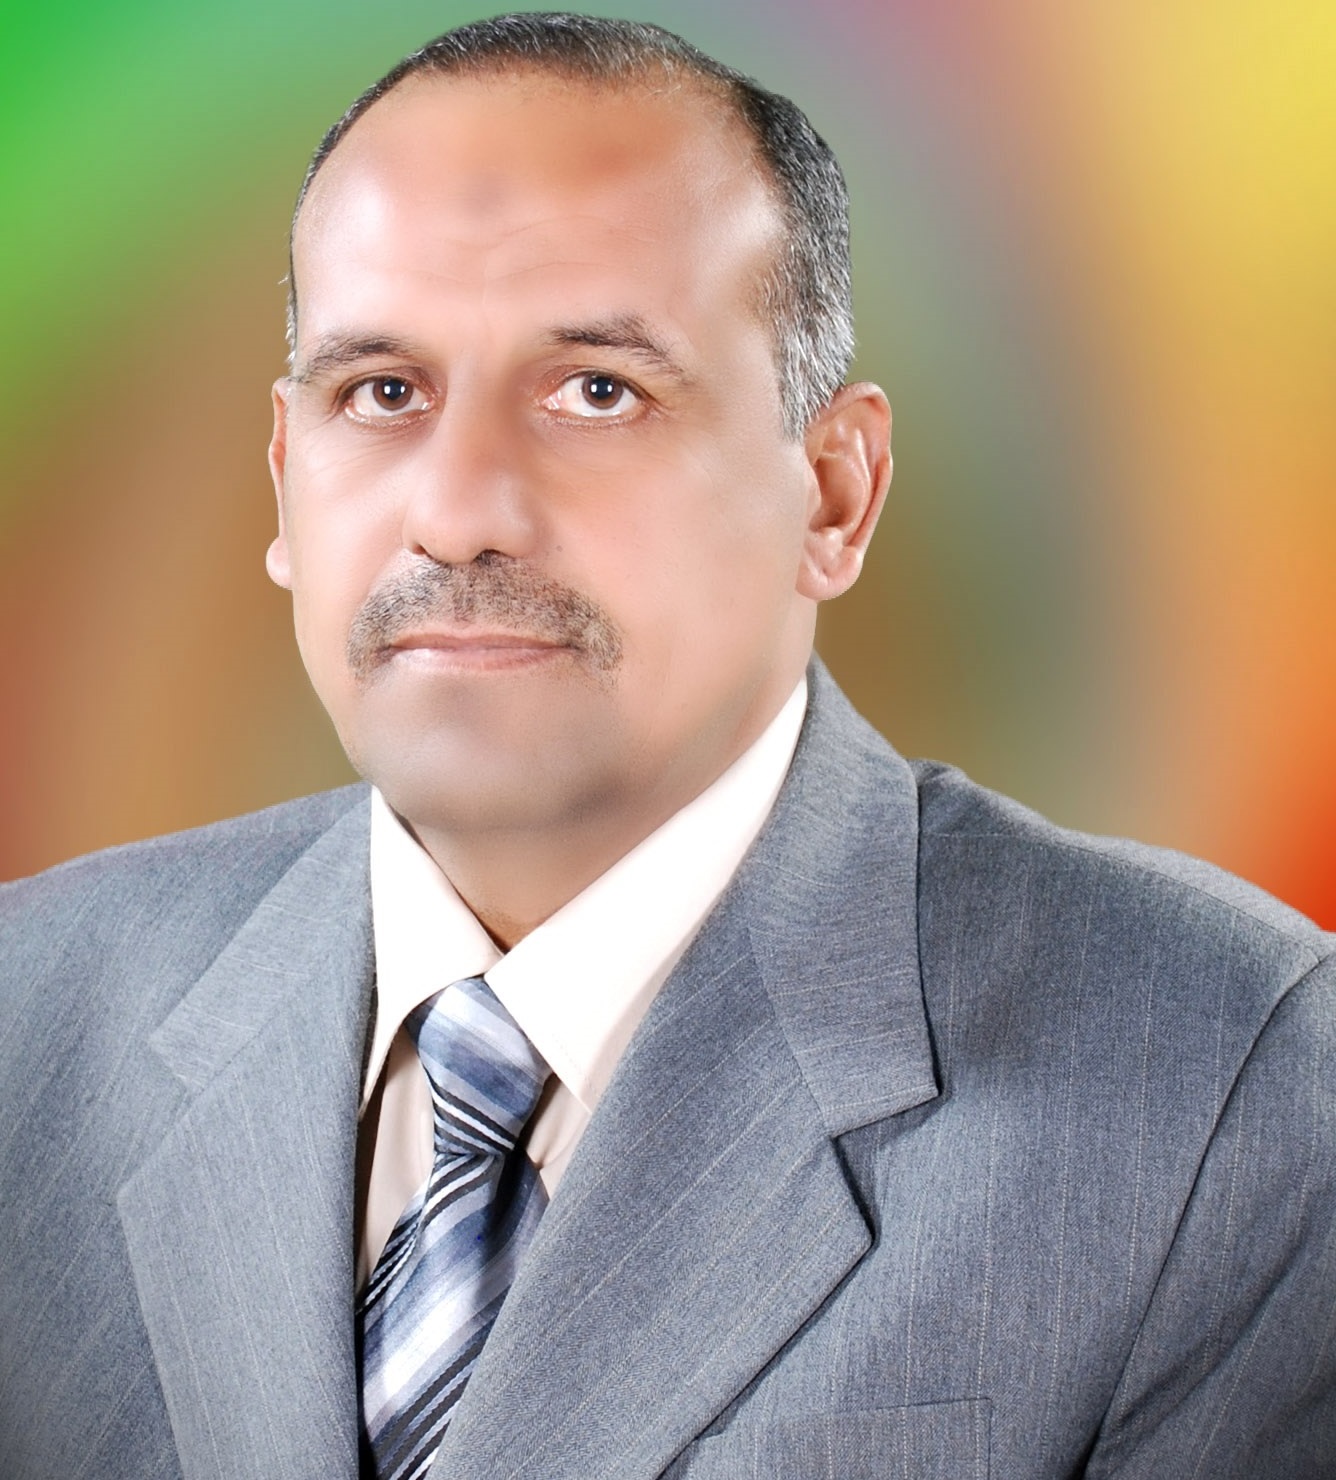 Shaker Majeed Khadhim